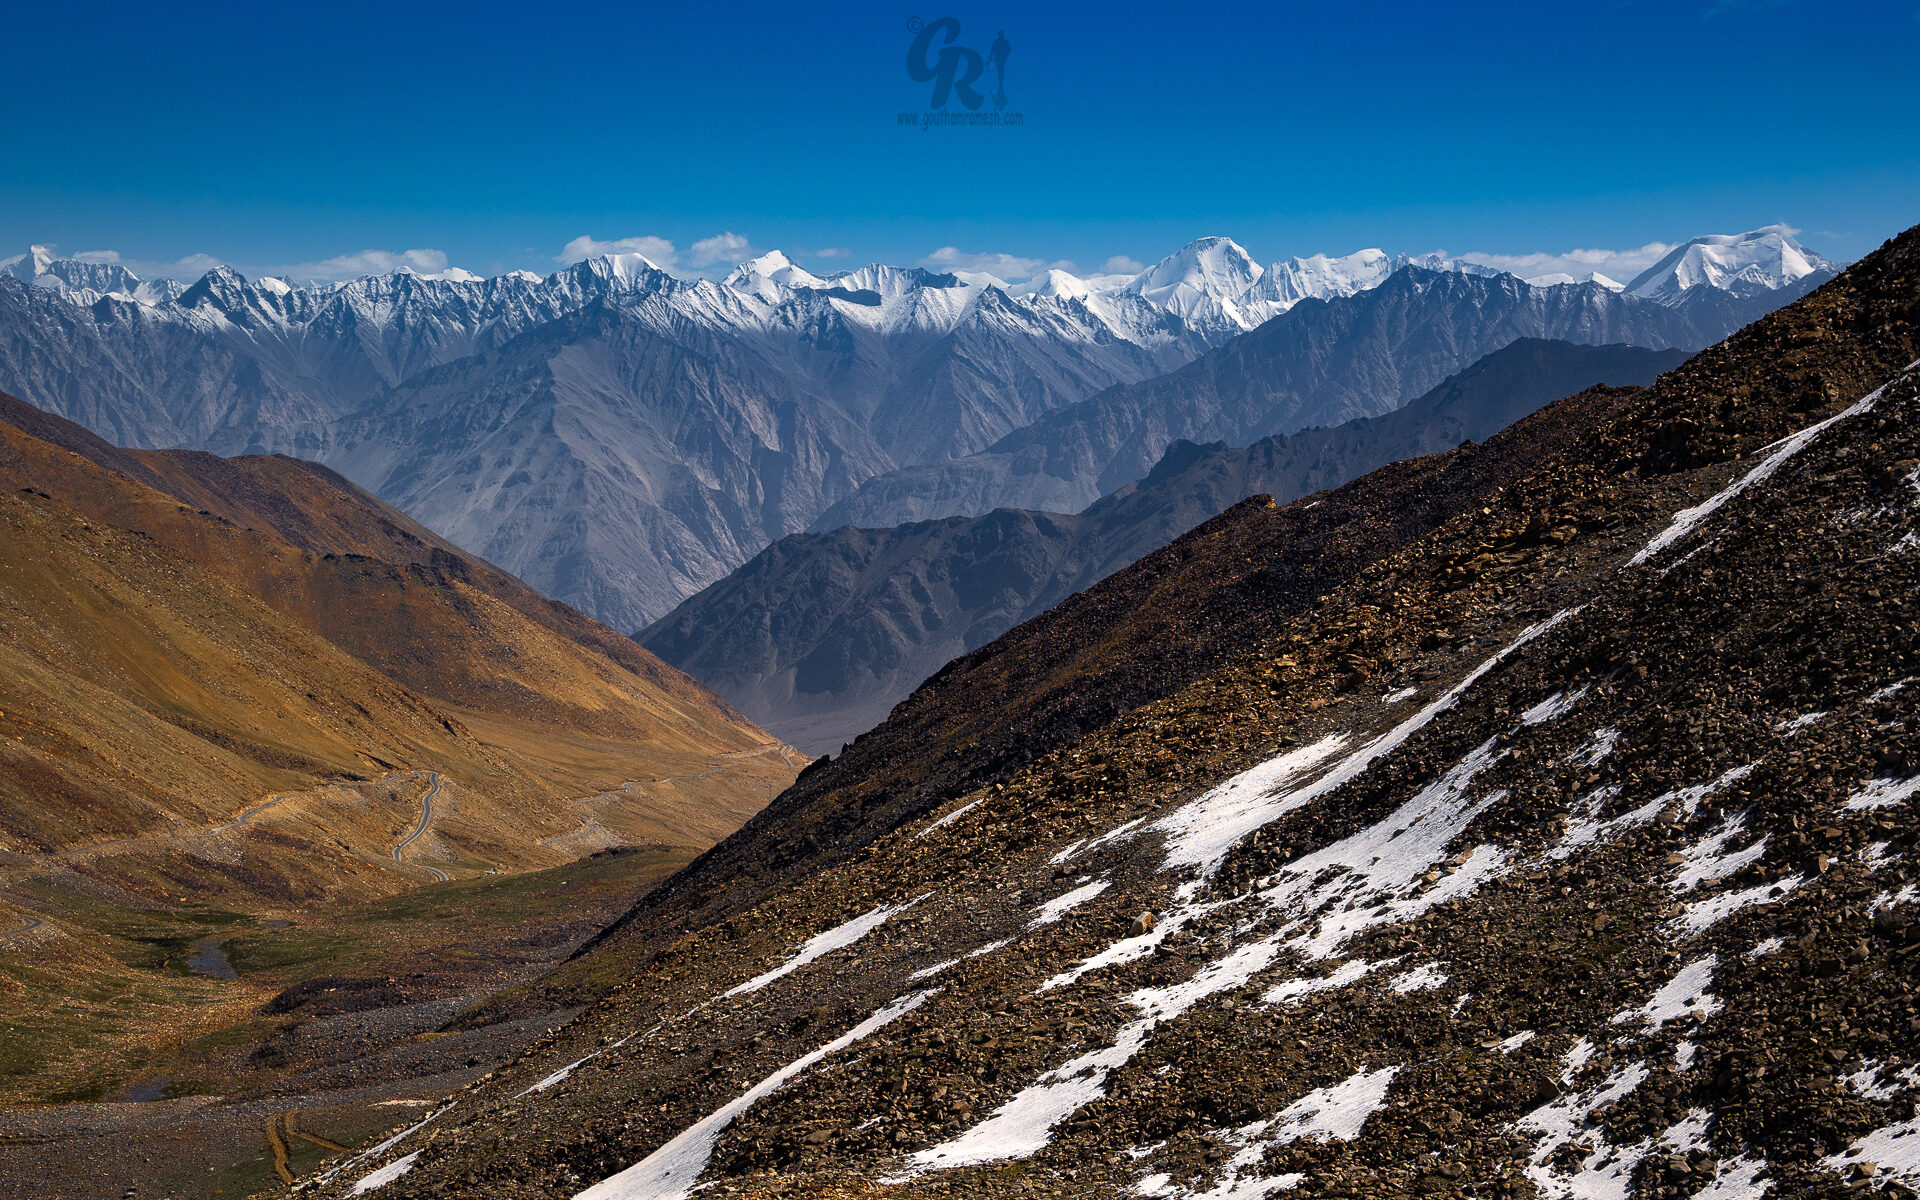 Kashmir and Ladakh